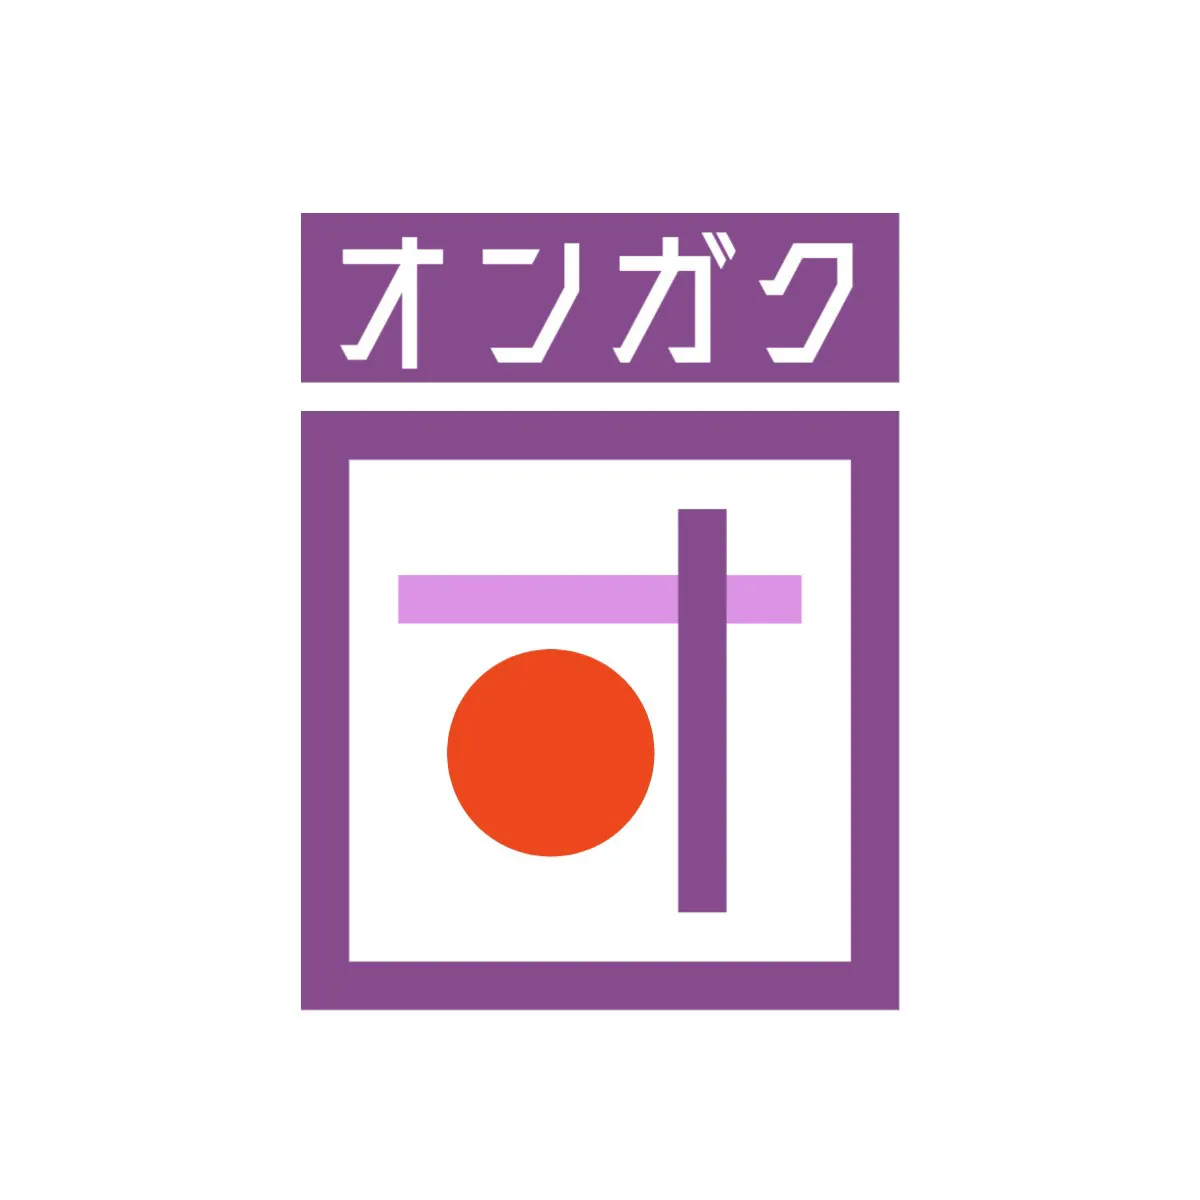 Purple shape band logo